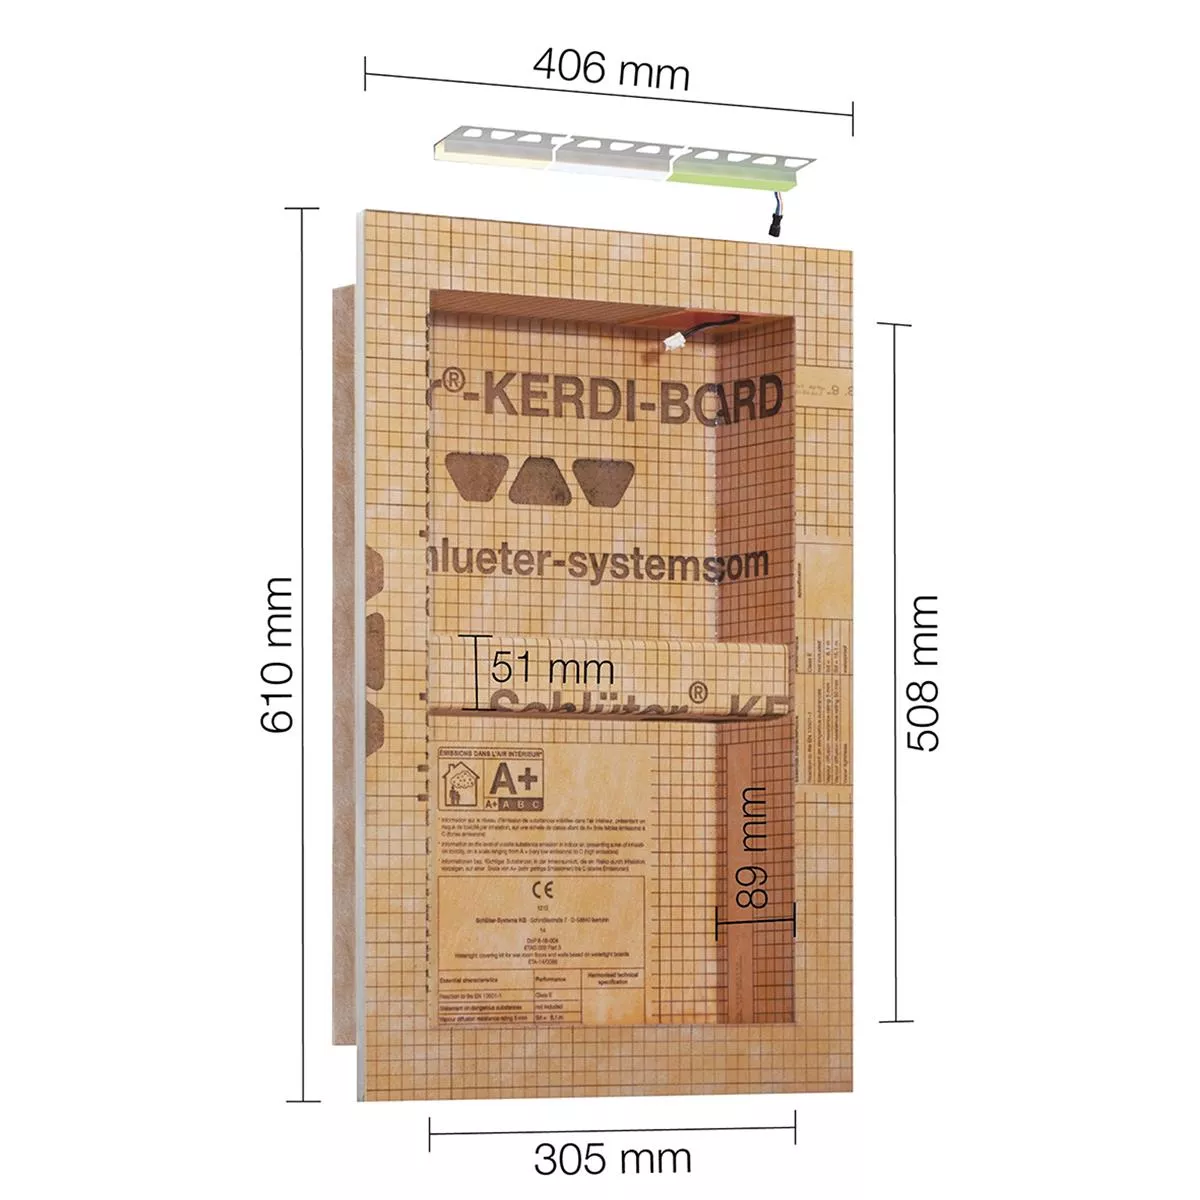 Schlüter Kerdi Board NLT nisset LED-verlichting RGB 30,5x50,8x0,89 cm